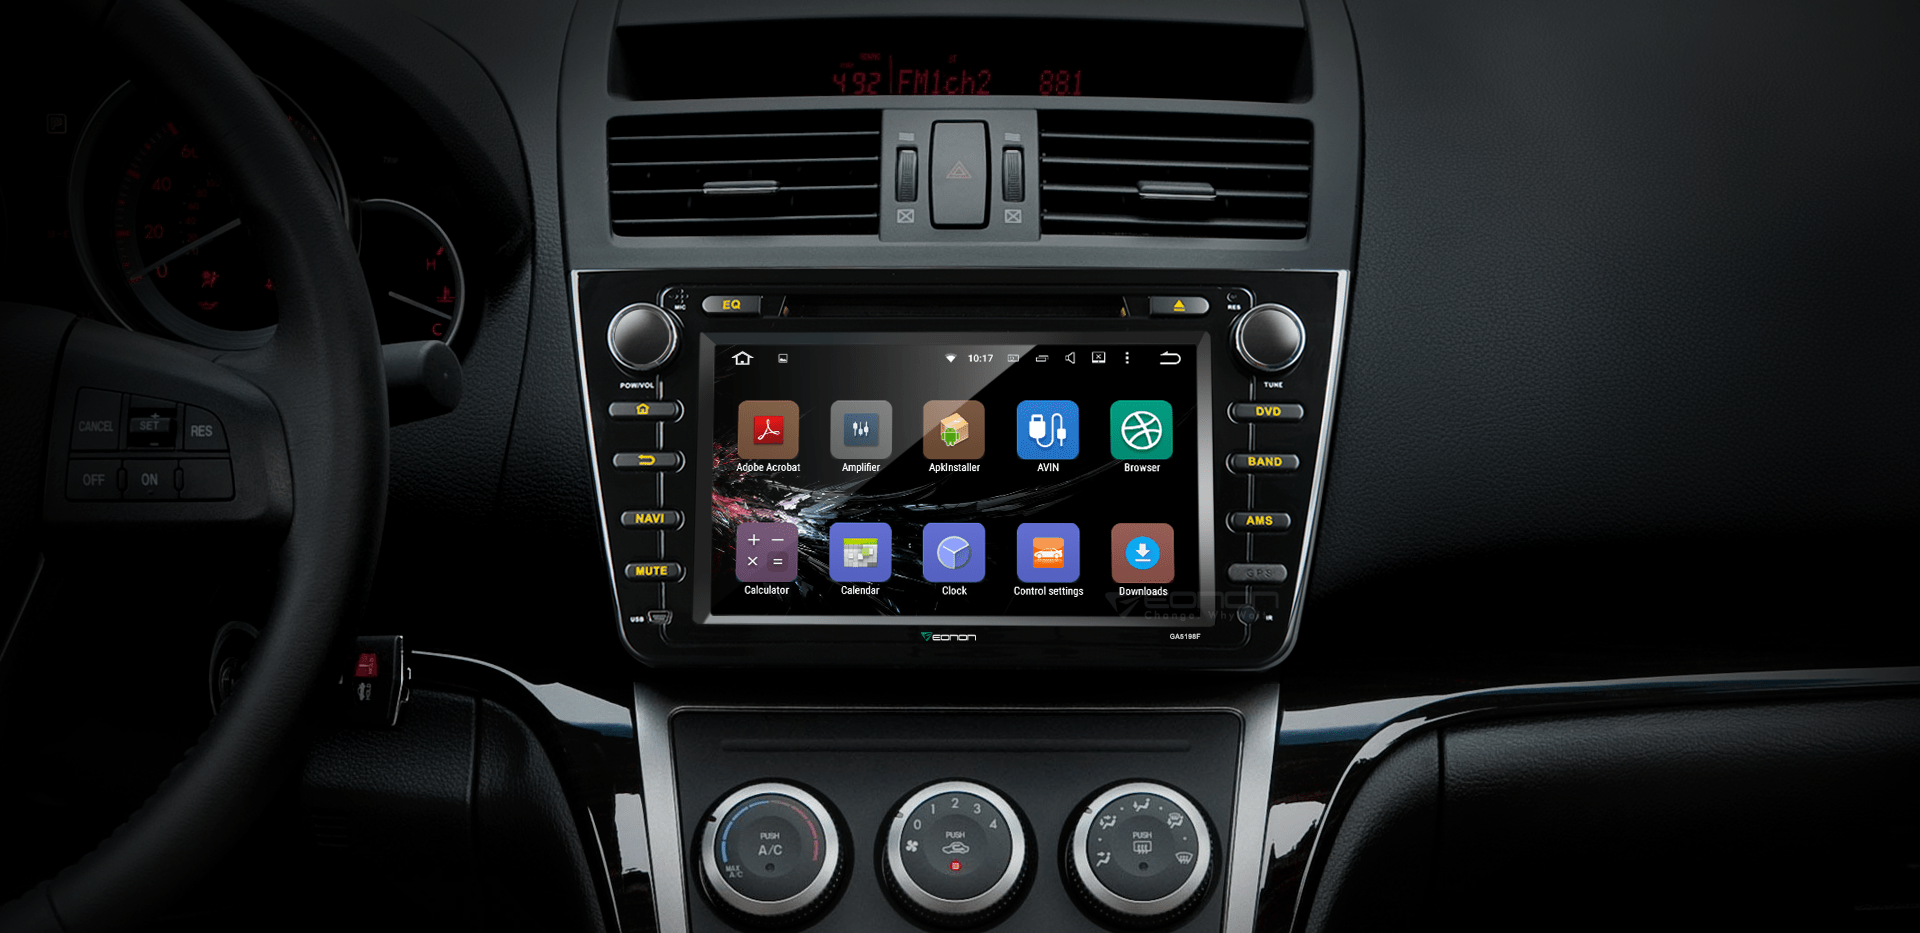 Eonon GA5198FV Mazda 6 Android 5.1 Car GPS Mazda 6